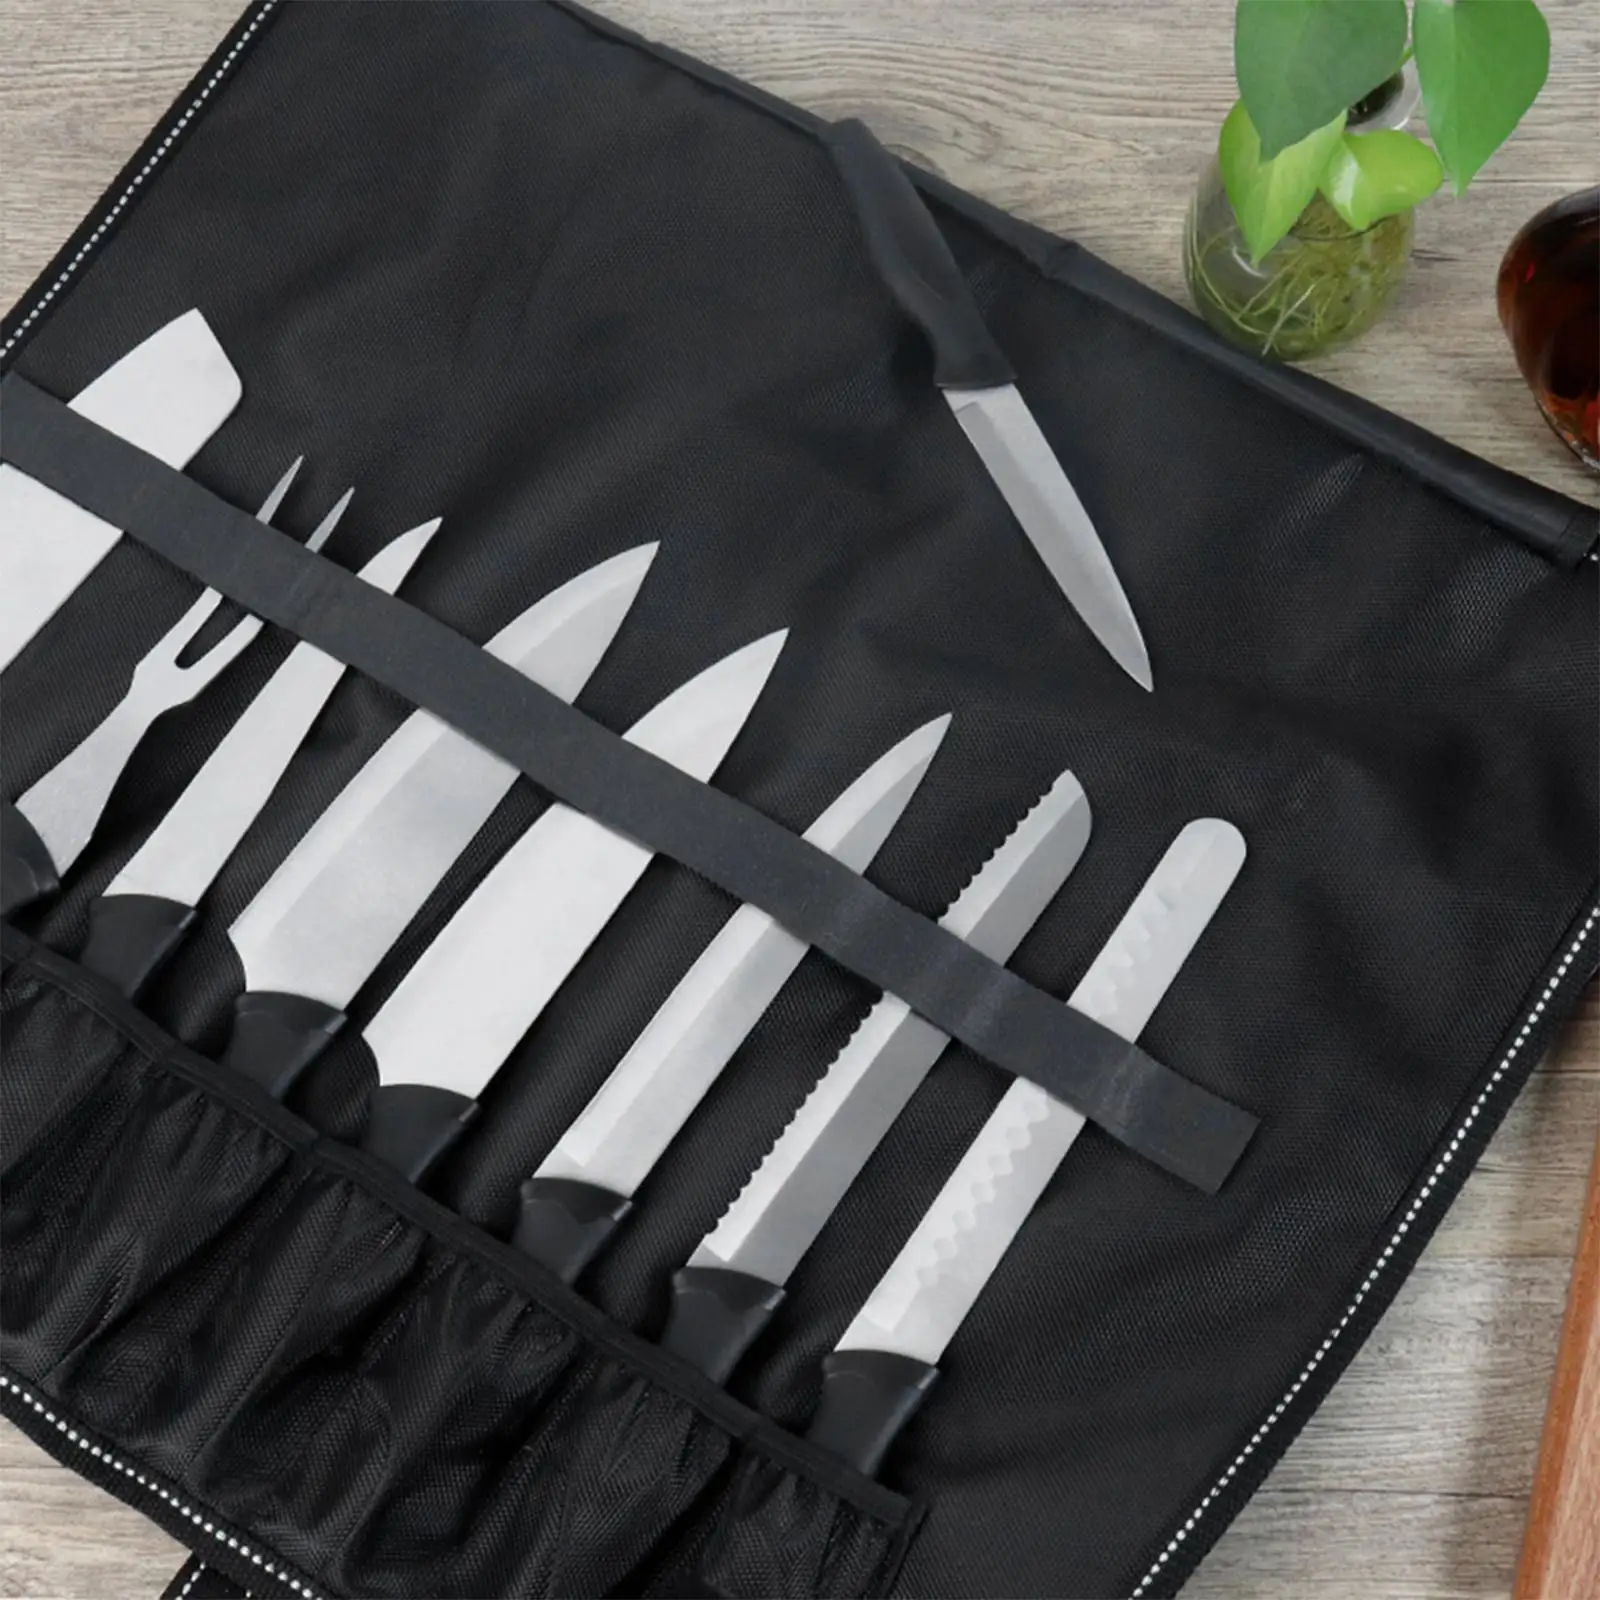 Chef Knives Roll Bag Adjustable Shoulder Strap Carrying Case Storage Bag for Kitchen Home Restaurant Chinese Western Food Knives